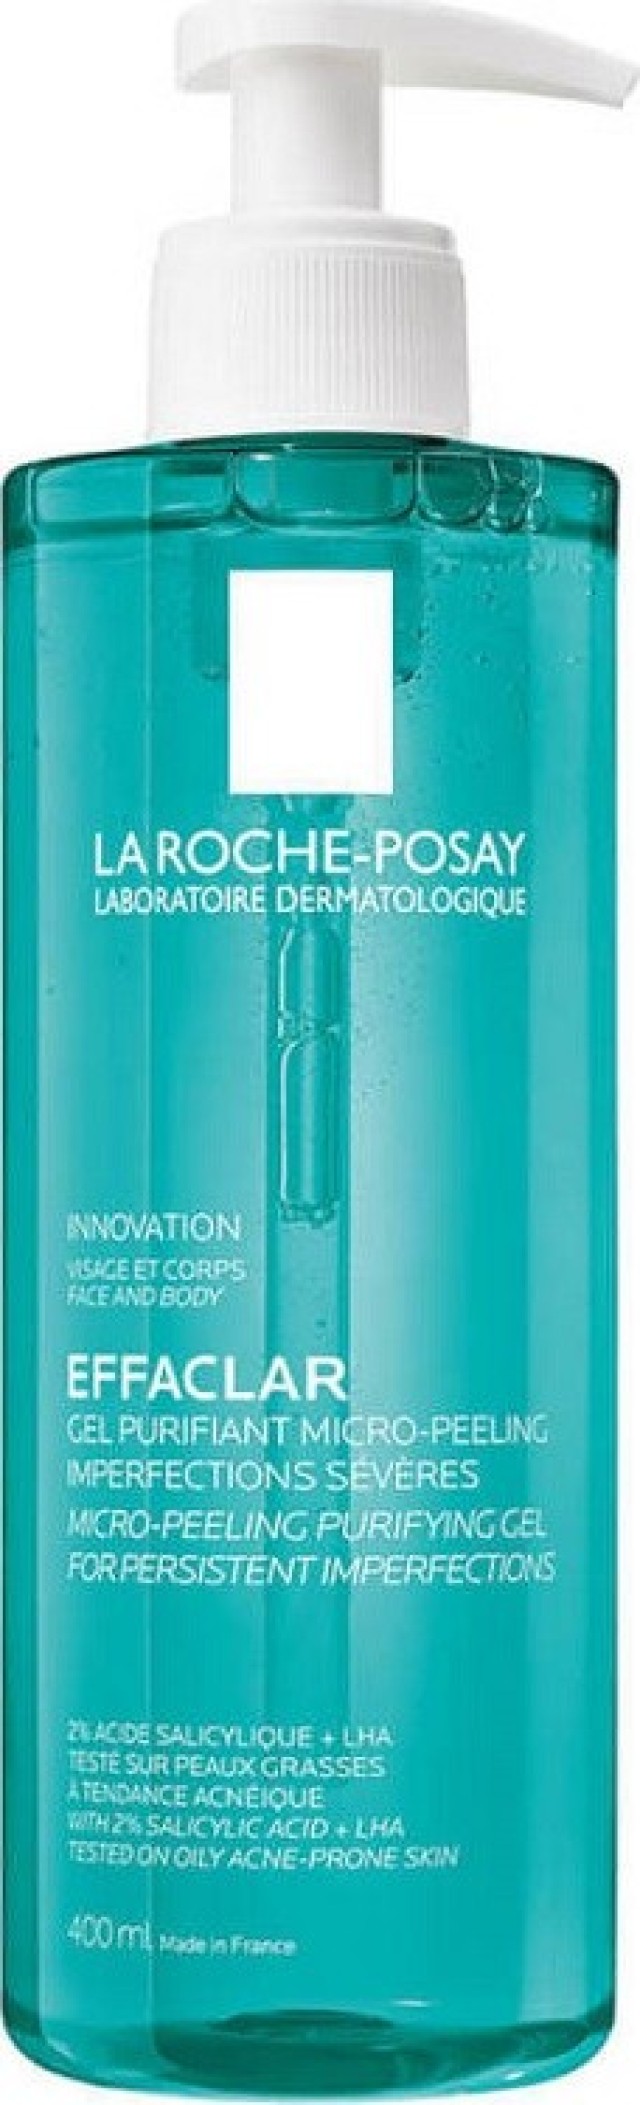 La Roche Posay Effaclar Μιcro-Peeling Purifying Gel Αφρώδες Gel Καθαρισμού Ενάντια σε Σοβαρές Ατέλειες για Πρόσωπο & Σώμα 400ml